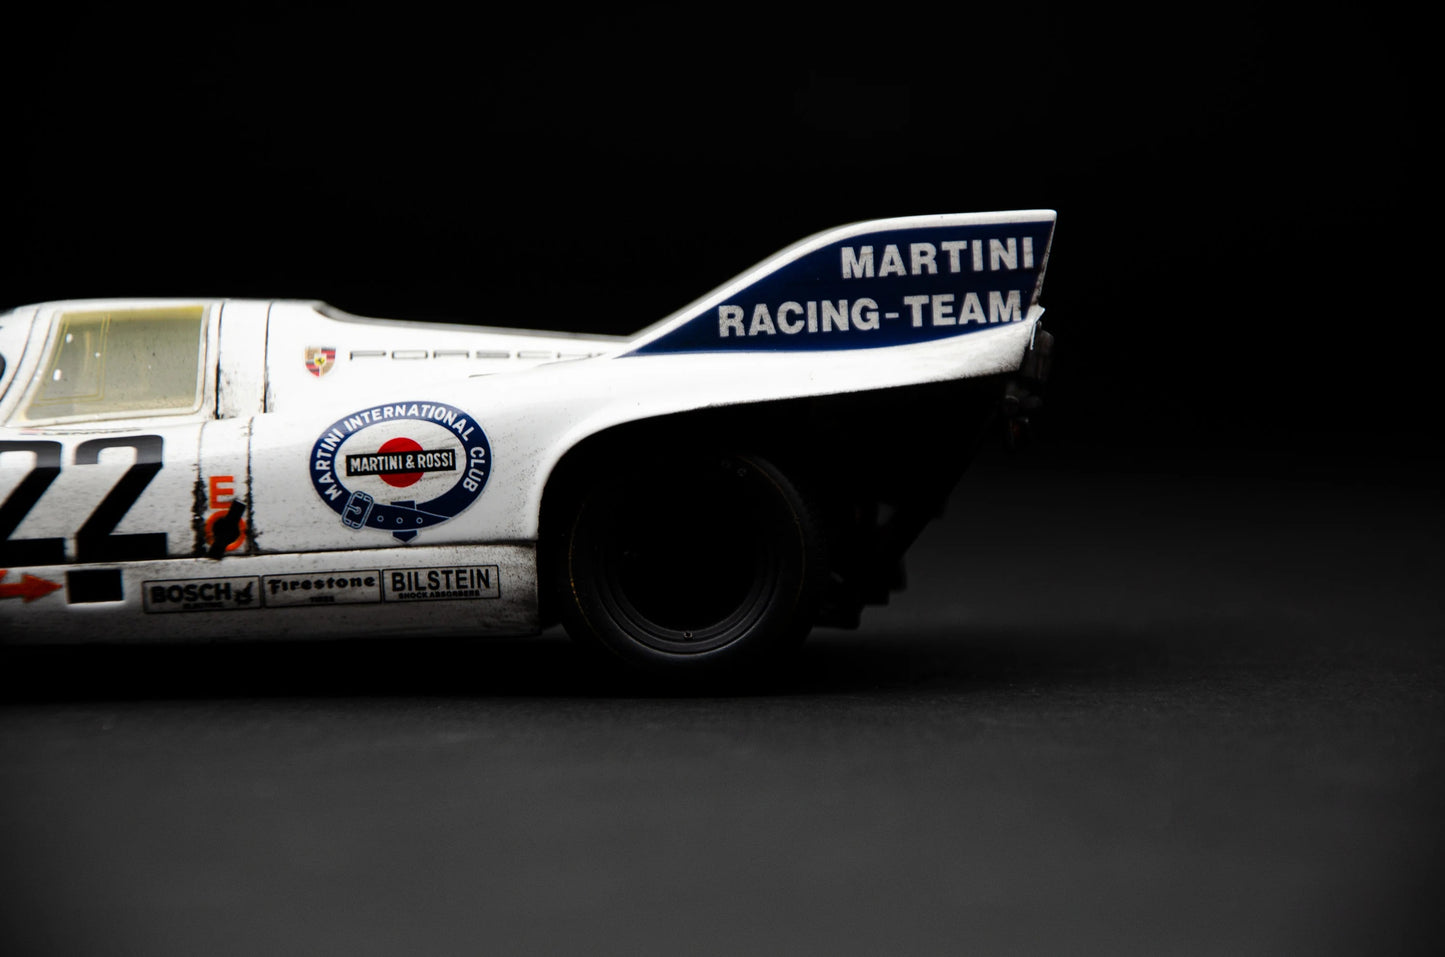 Amalgam Collection Porsche 917 KH Le Mans Martini (1971) 1:18 Model Car | Detailed Collector's Edition, Precise Replica of Iconic Le Mans Winner | 2Jour Concierge, #1 luxury high-end gift & lifestyle shop